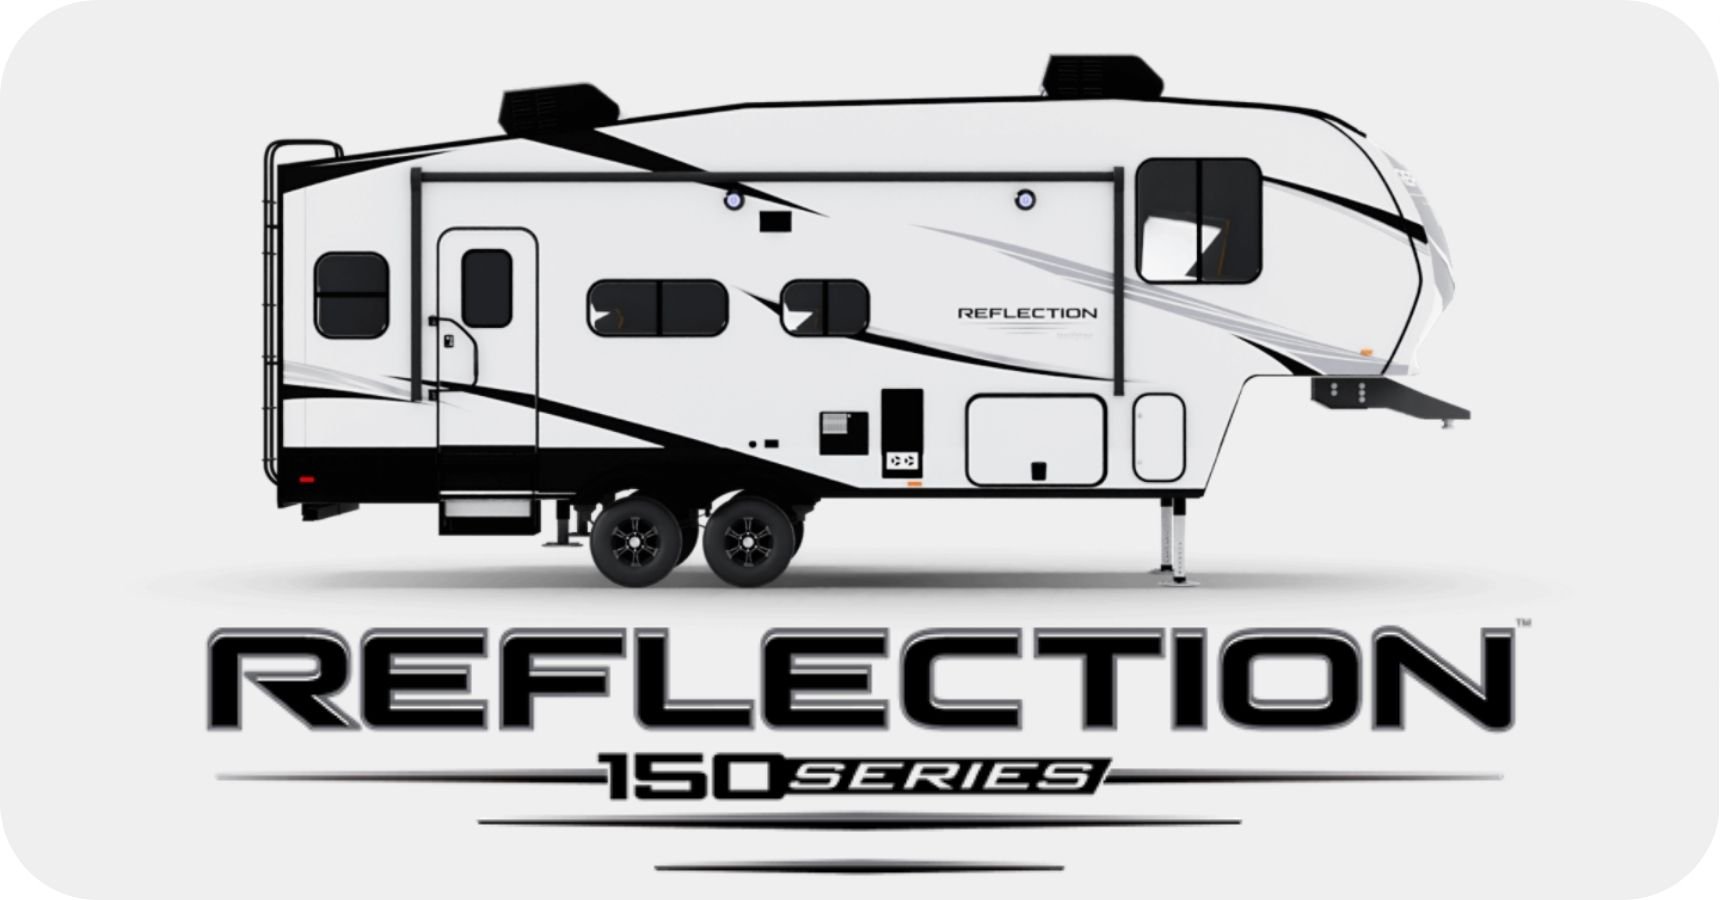 Grand Design Reflection 150 Series